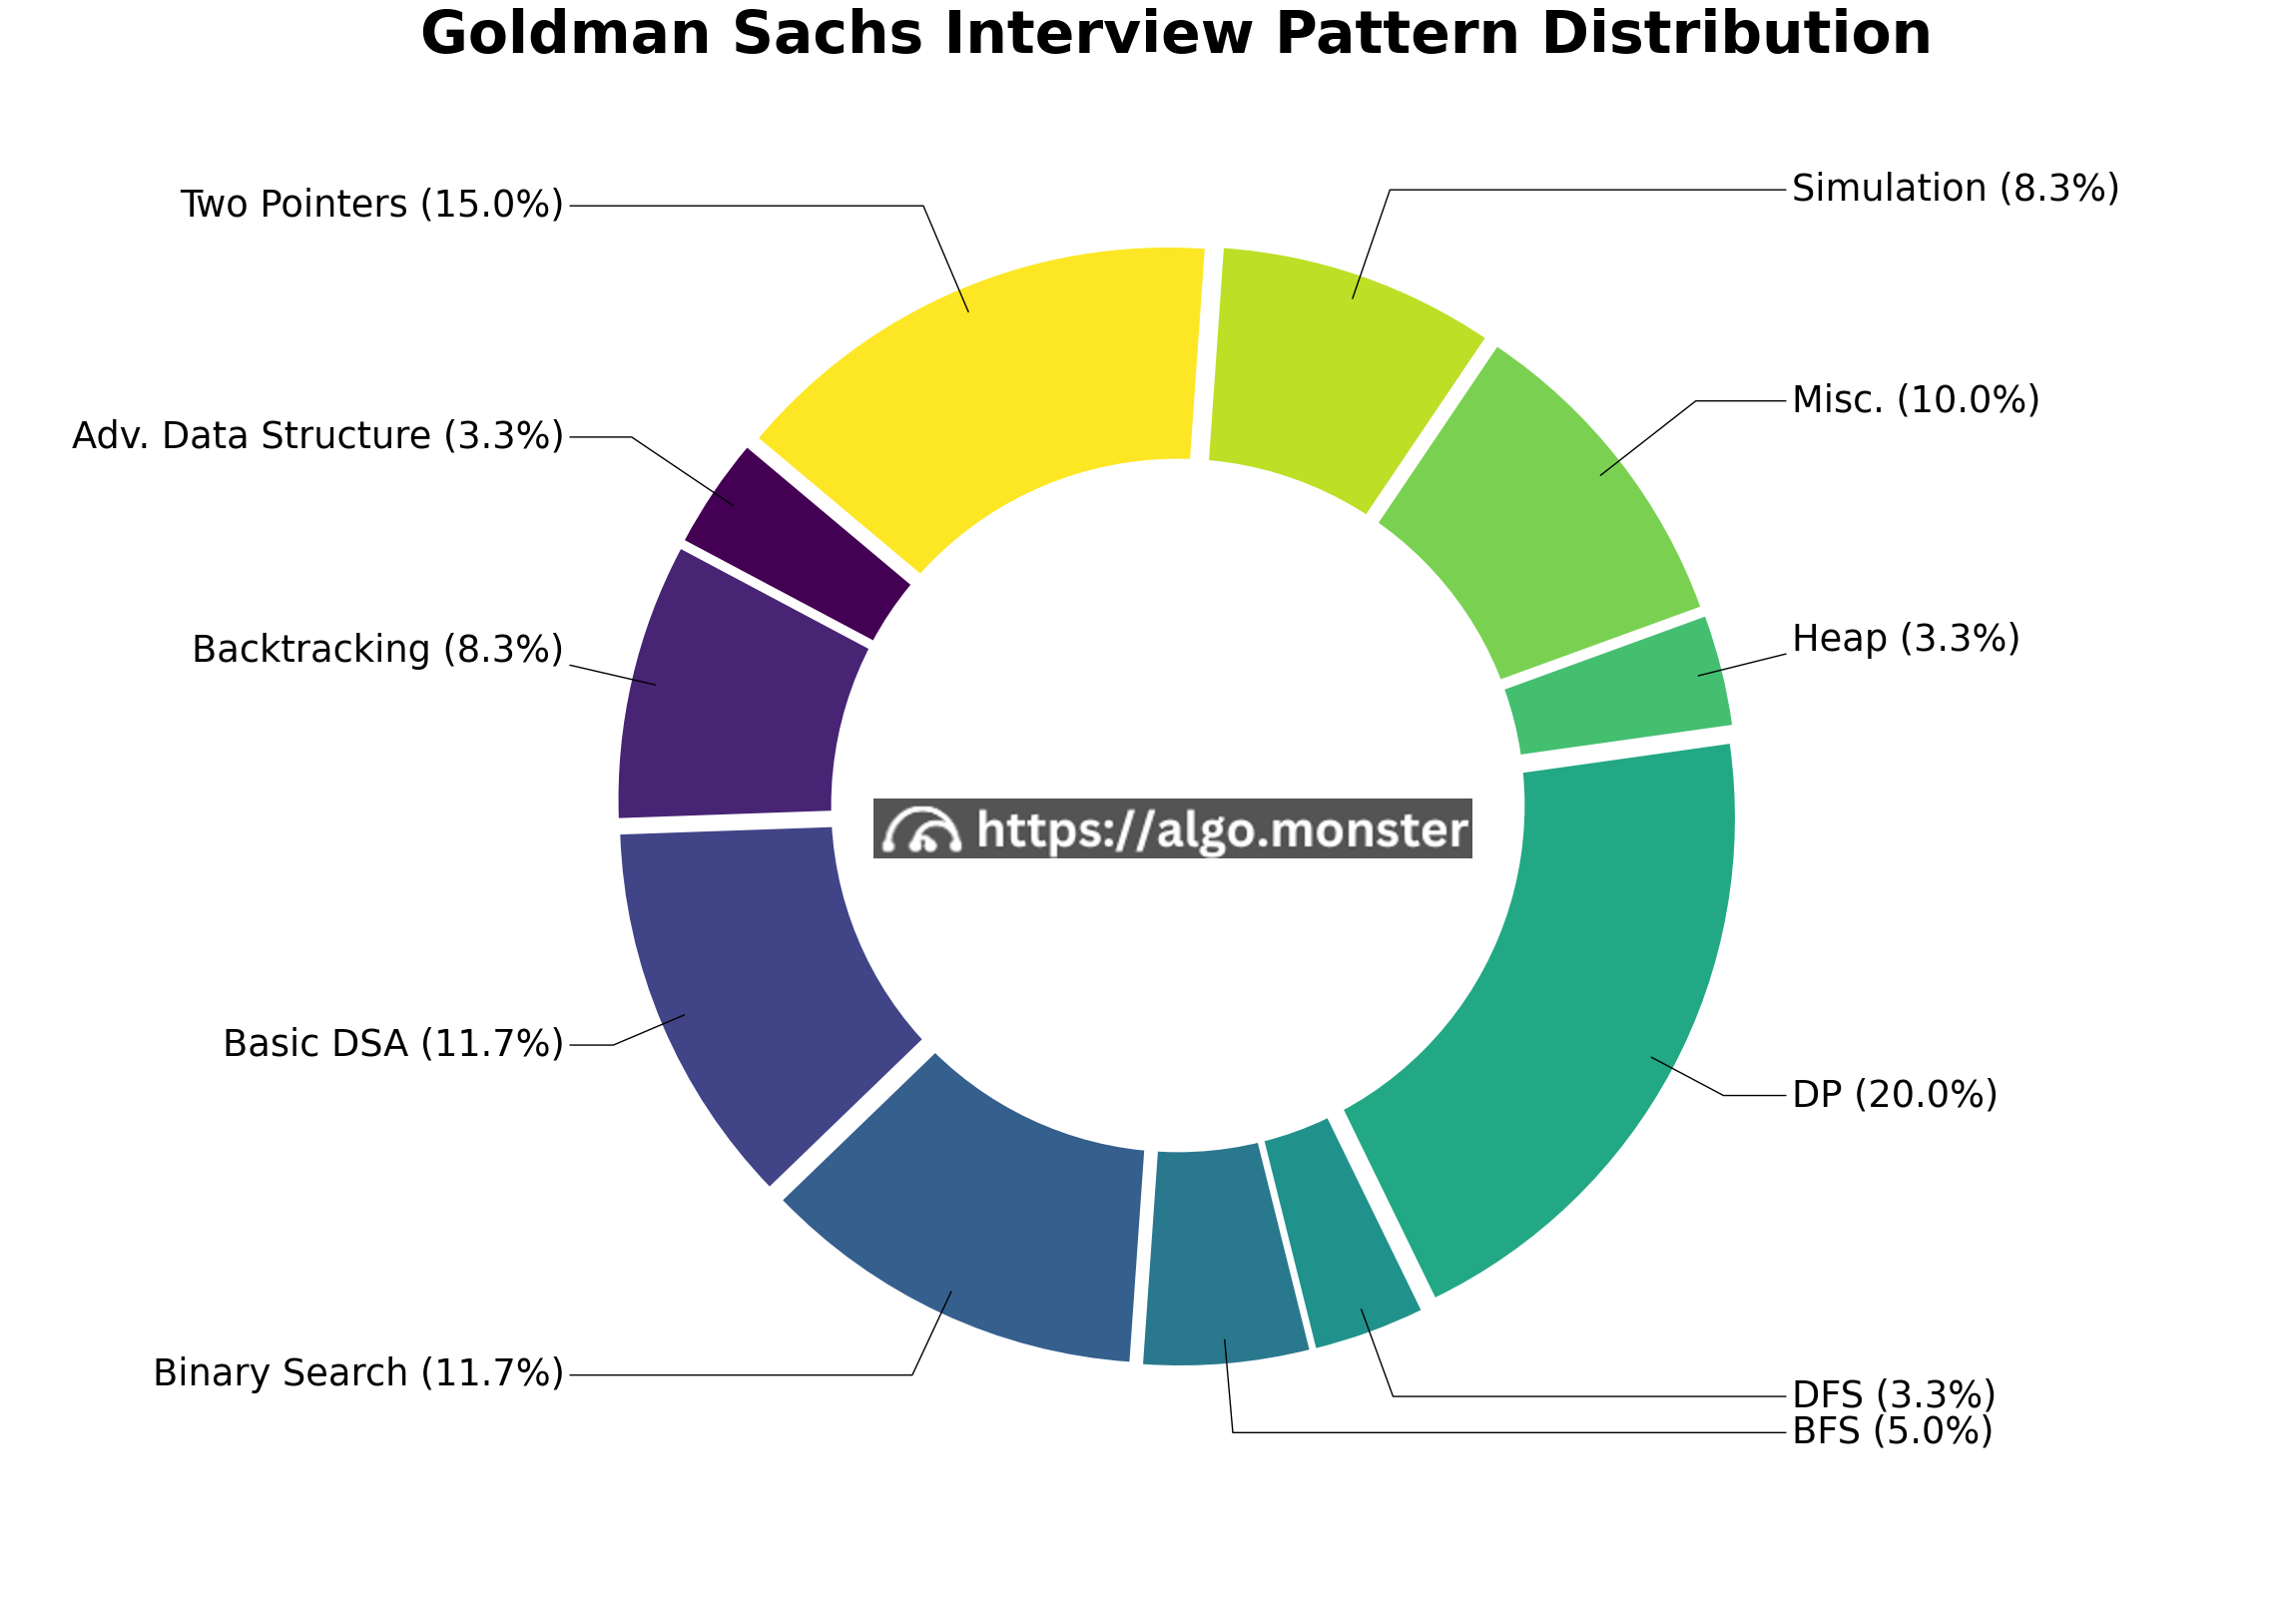 Goldman Sachs interview questions breakdown